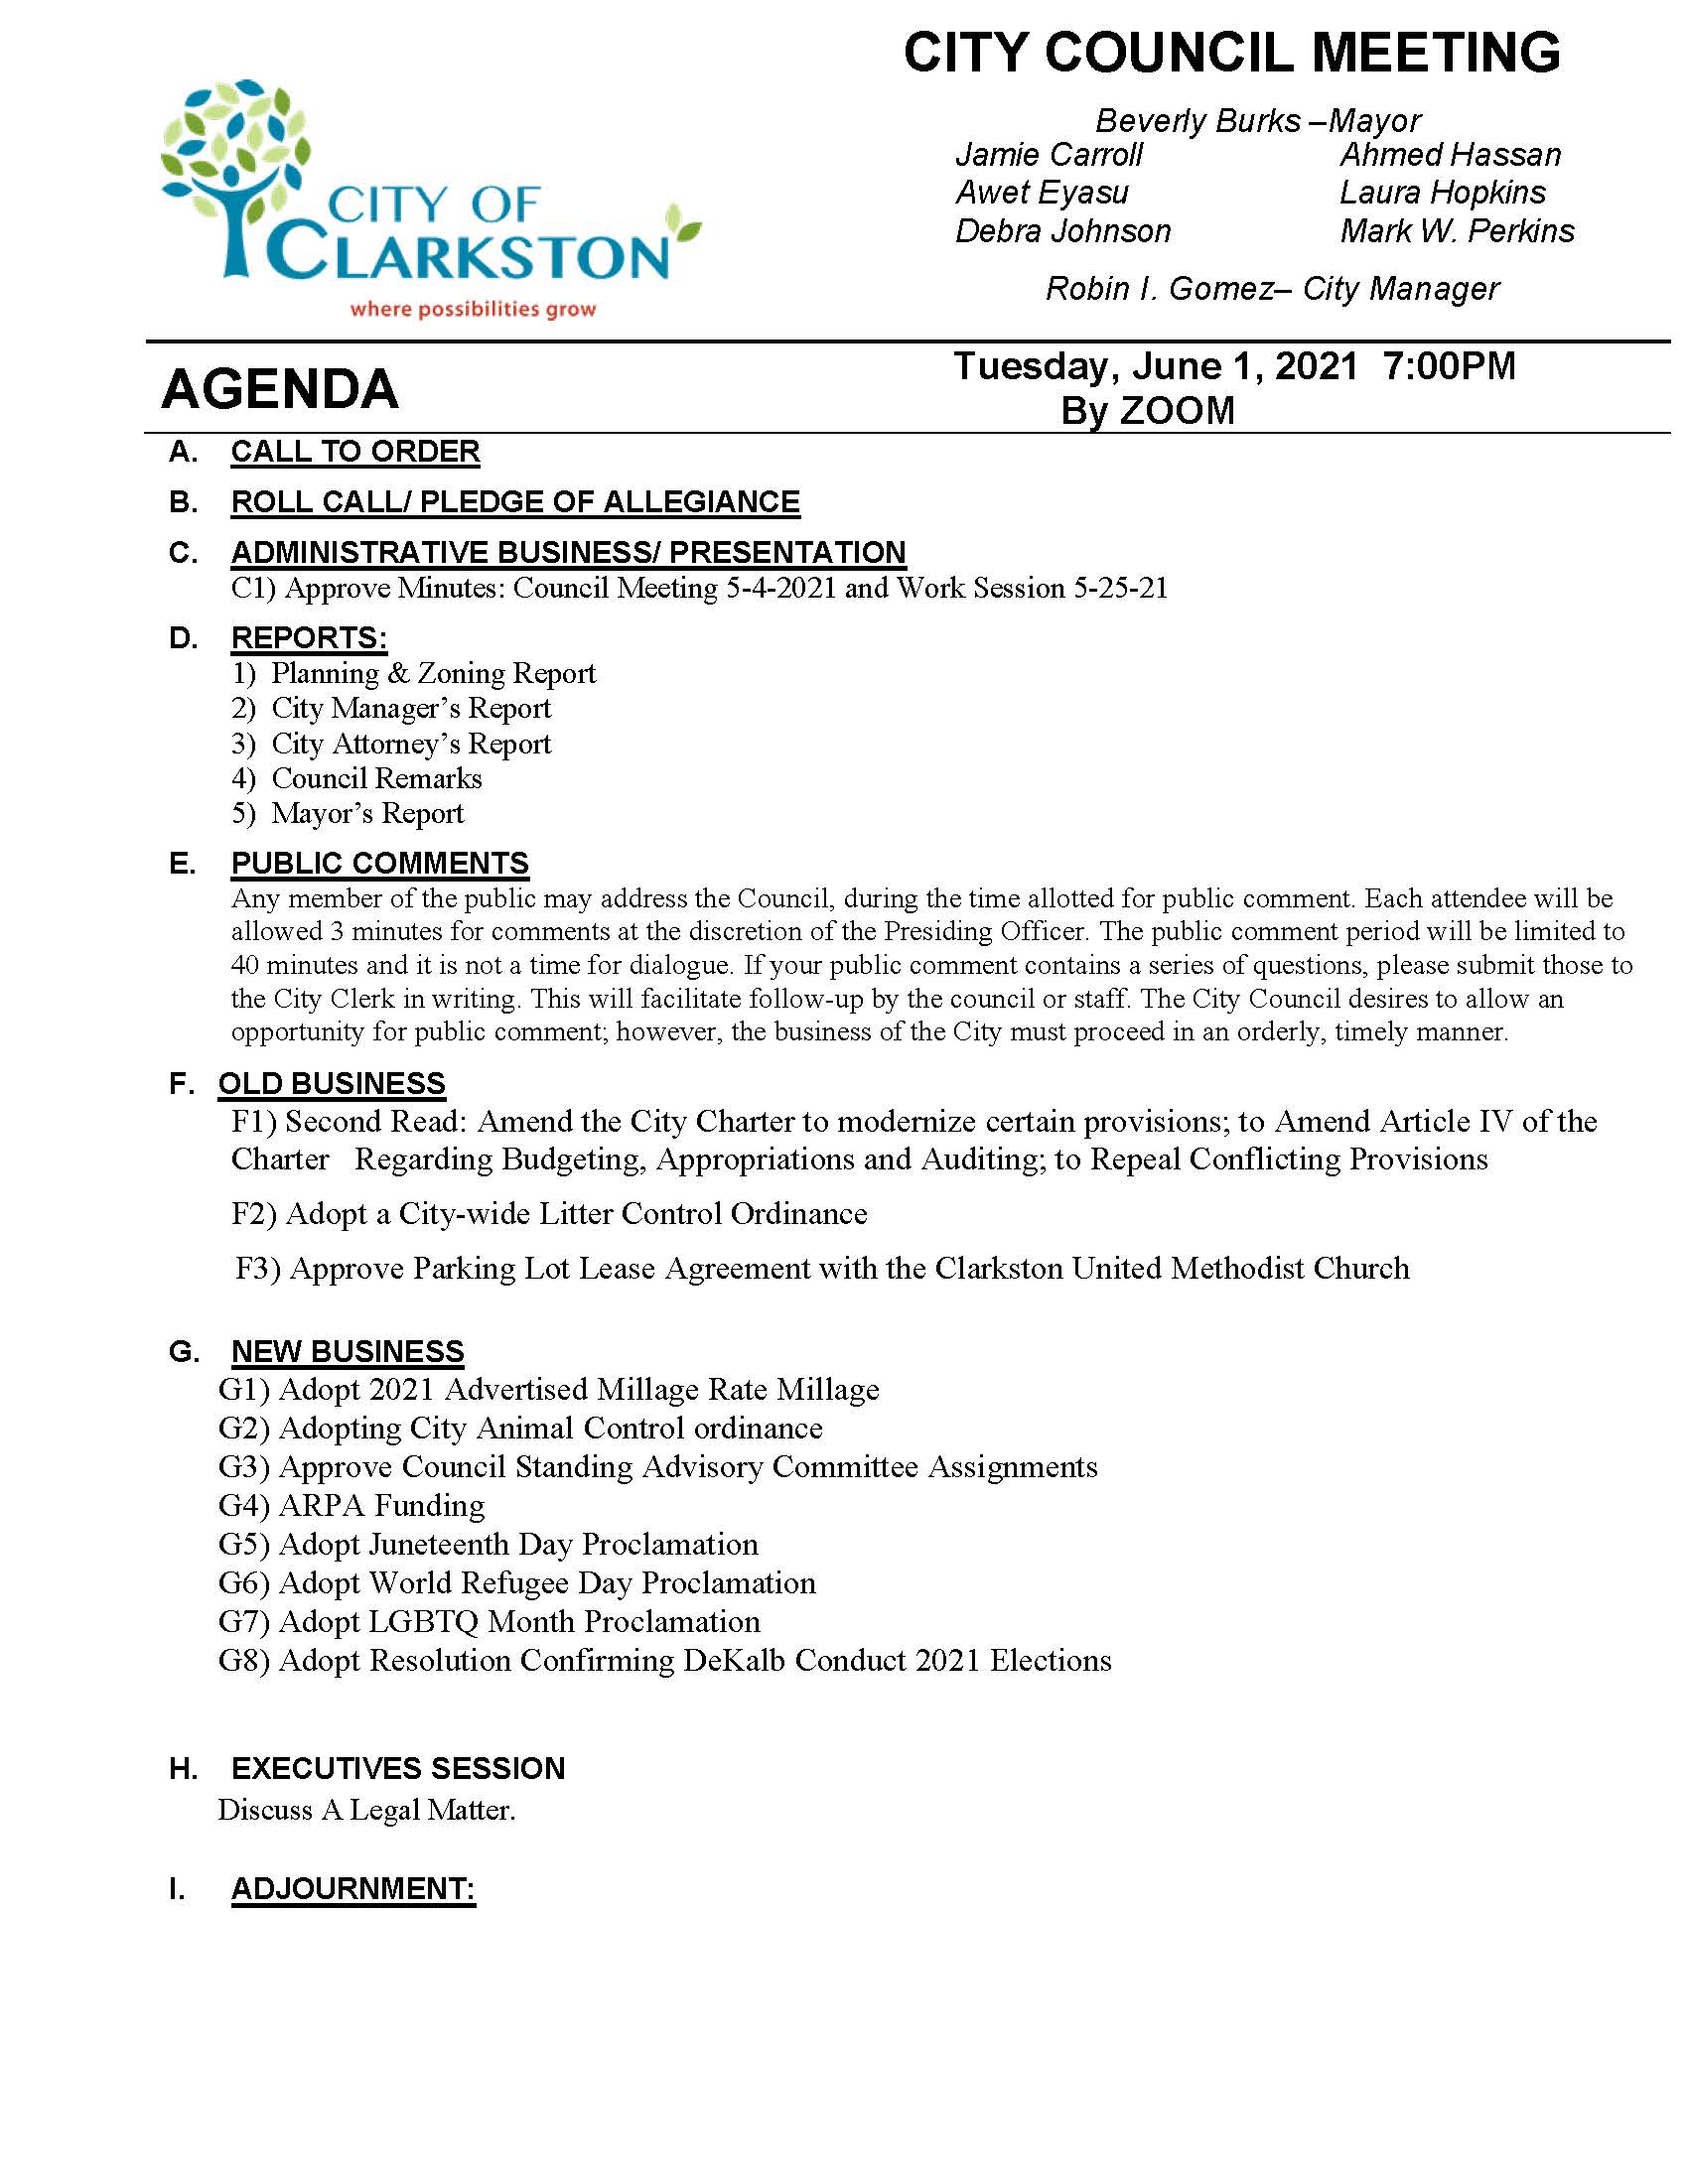 council agenda 6-1-21